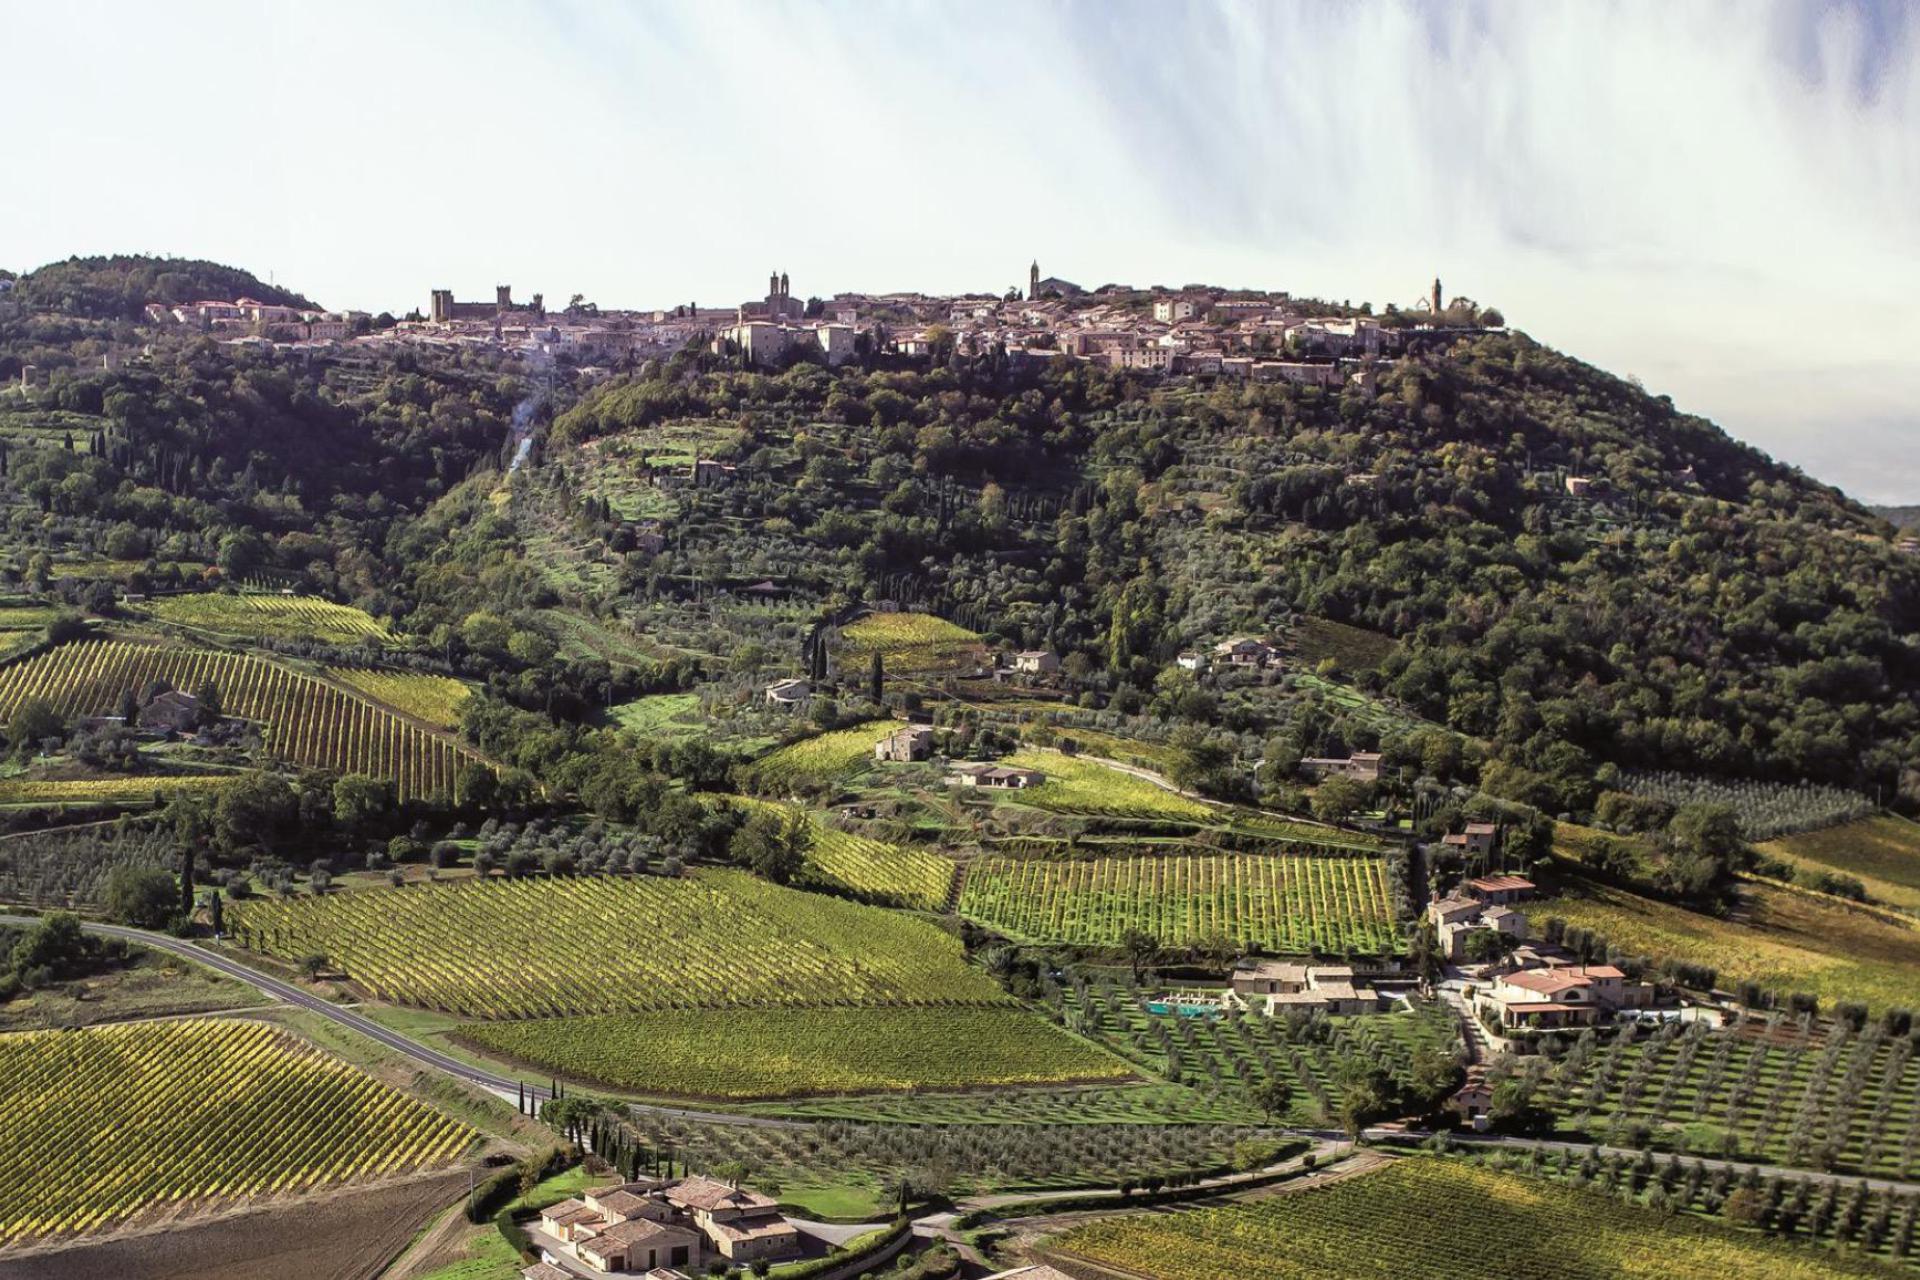 Agriturismo Toscane Luxe agriturismo Montalcino - tussen wijngaarden | myitaly.nl